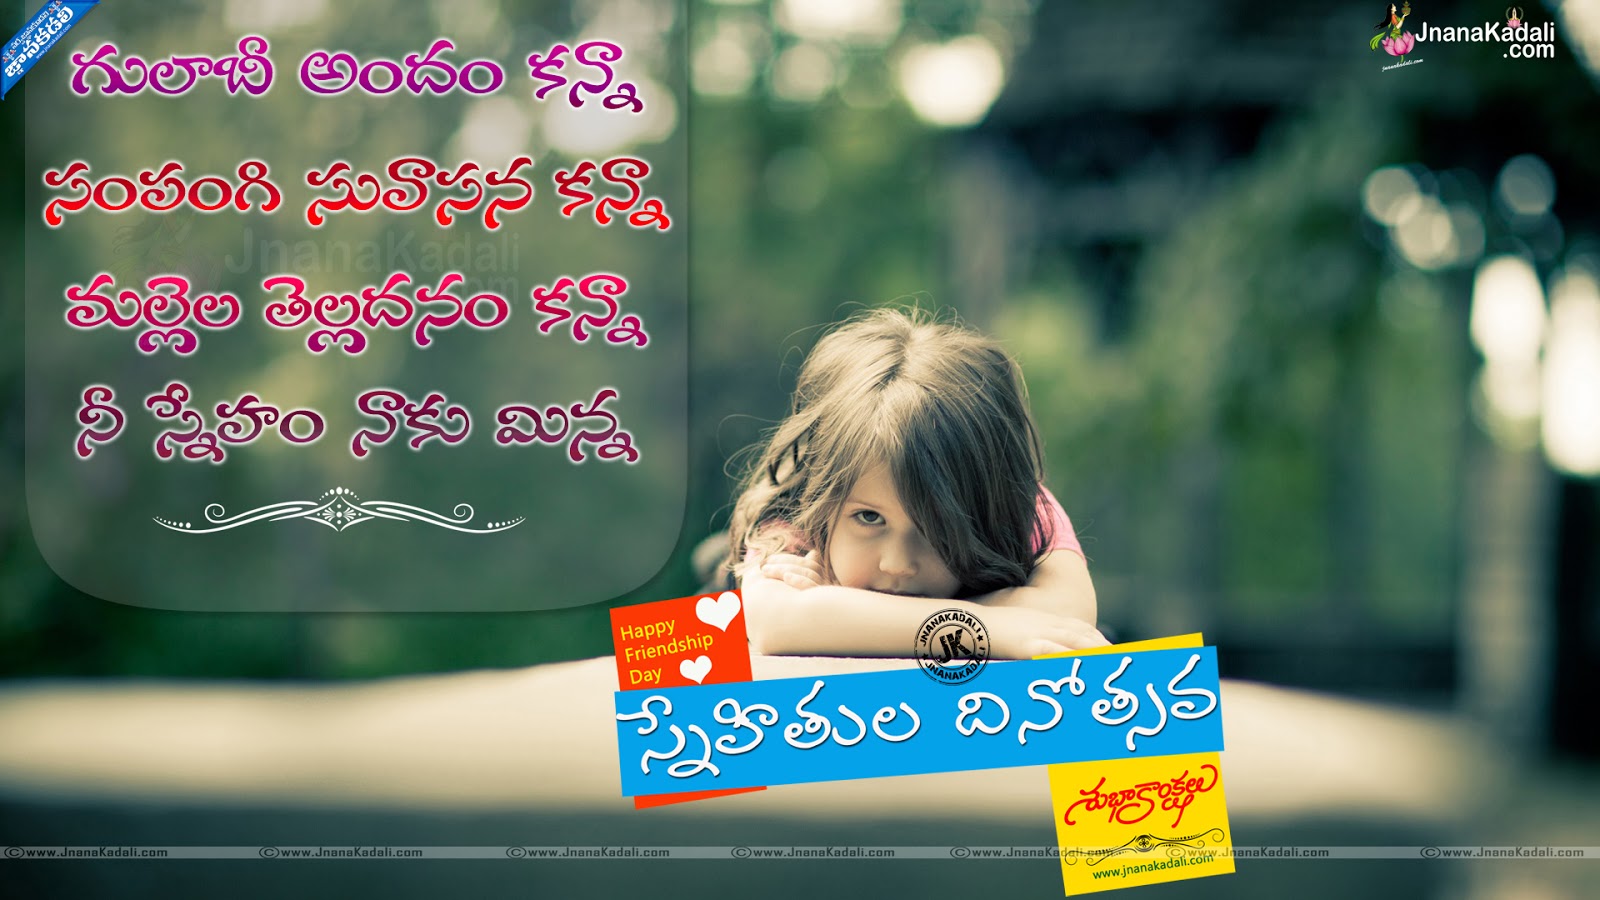 Telugu Friendship Day background Free HD Wallpapers with Telugu ...